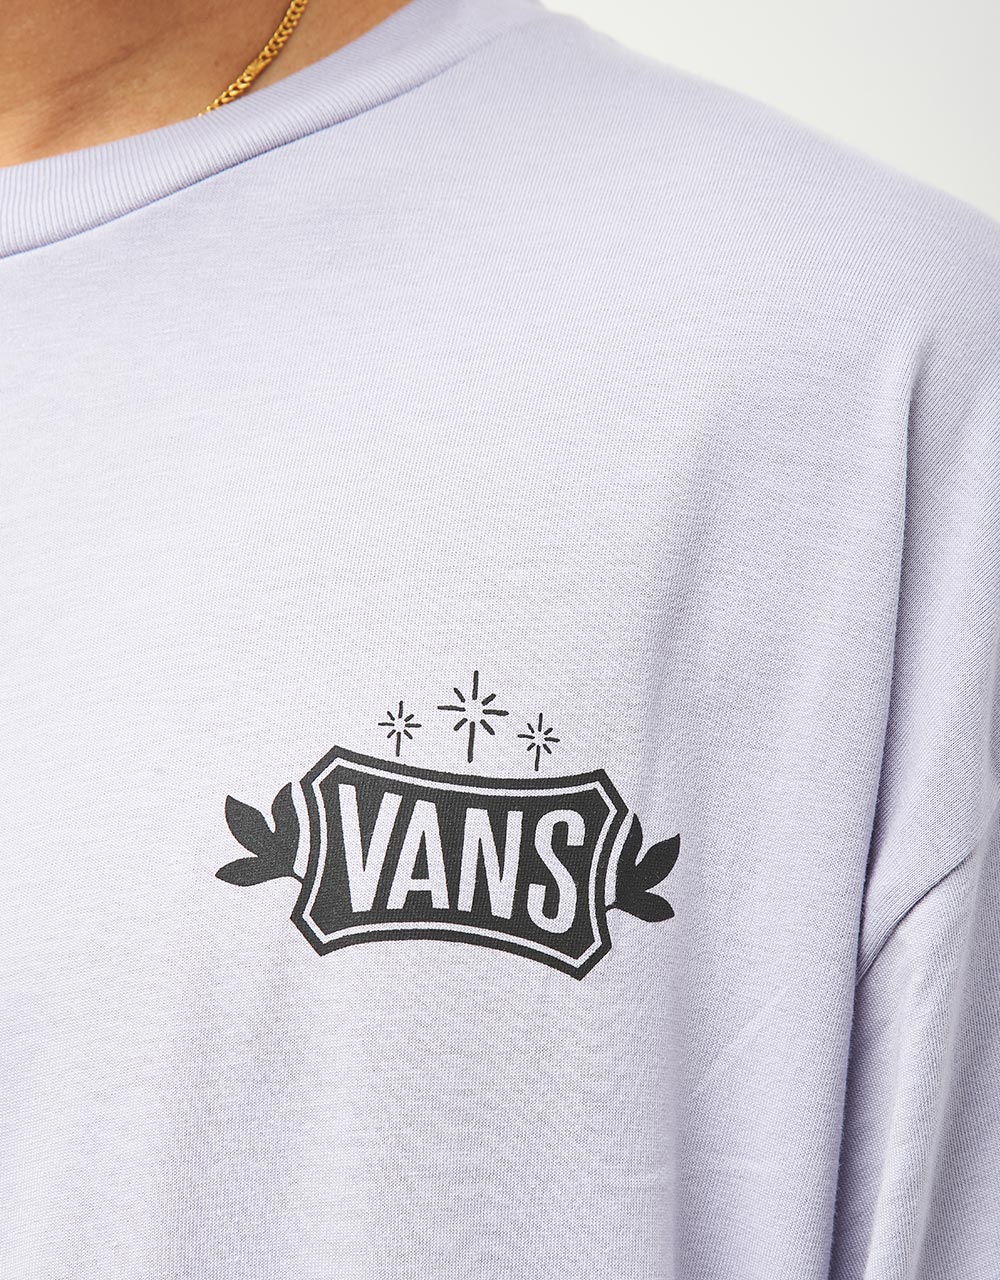 Vans Flower Tower L/S T-Shirt - Languid Lavender